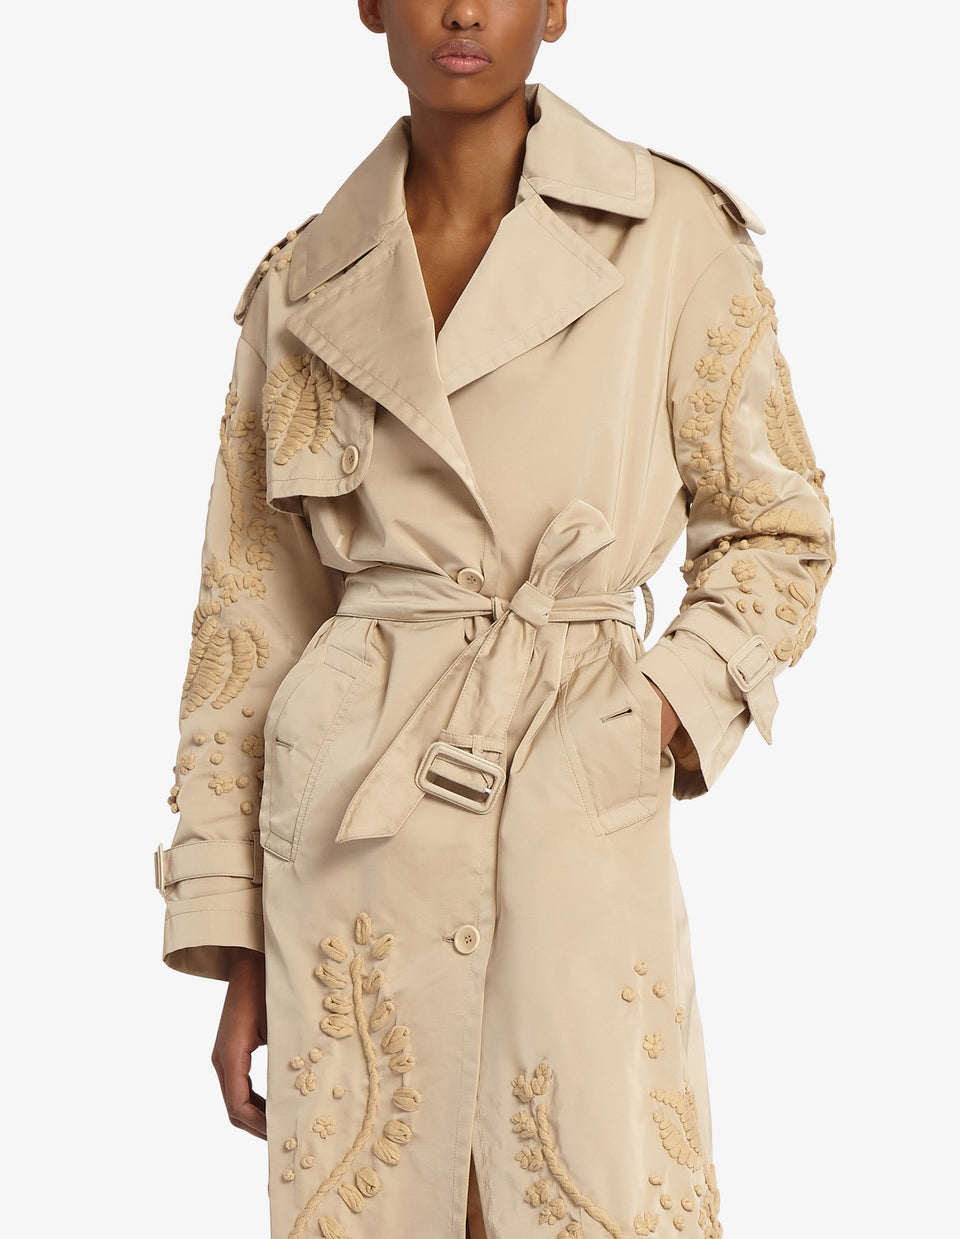 Coat in beige fabric